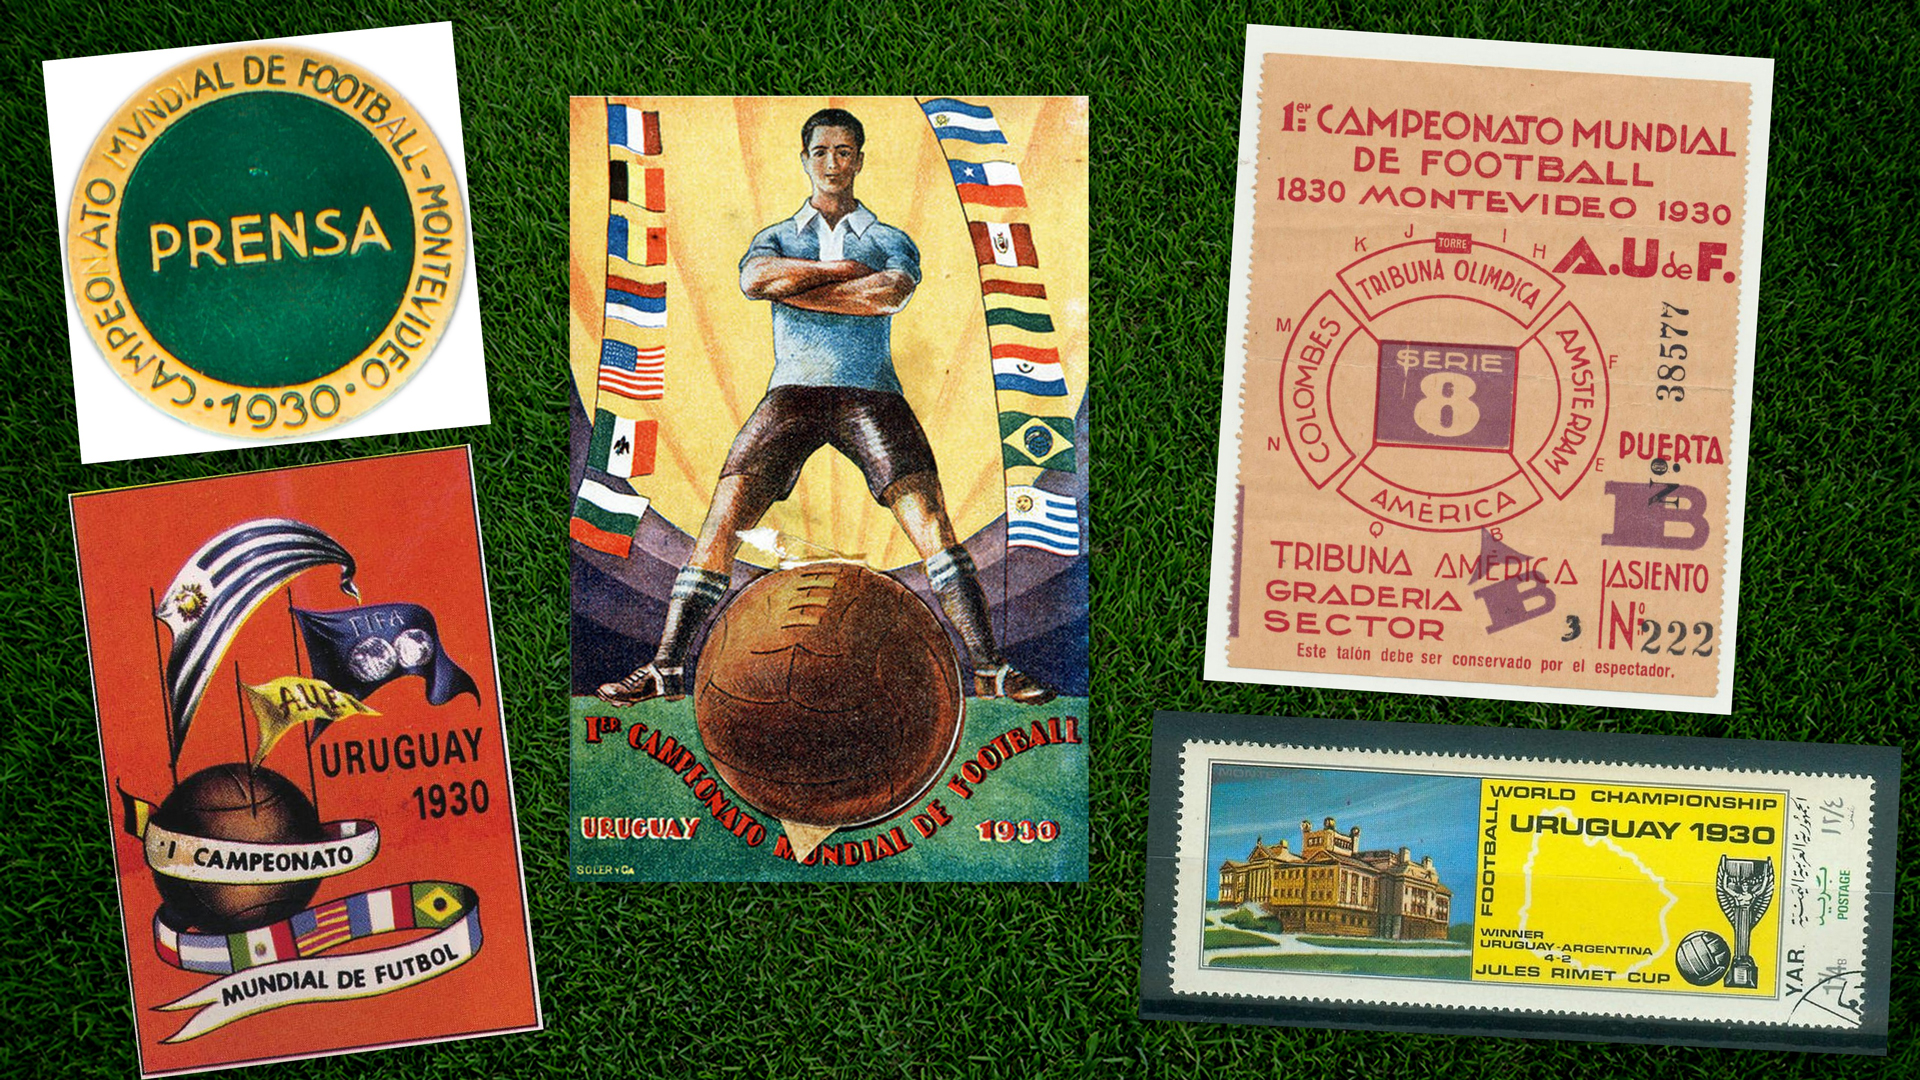 Постеры, марка, билет, валюта Чемпионата мира 1930 года